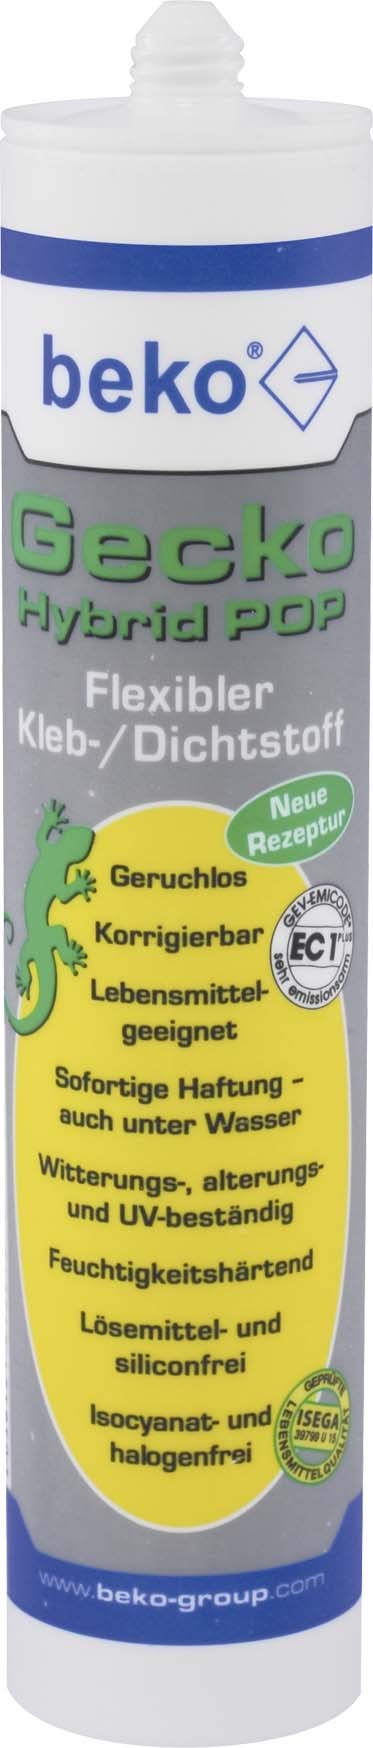 Gecko Kleb-/Dichtstoff 310ml HybridP. schw. 2453102 